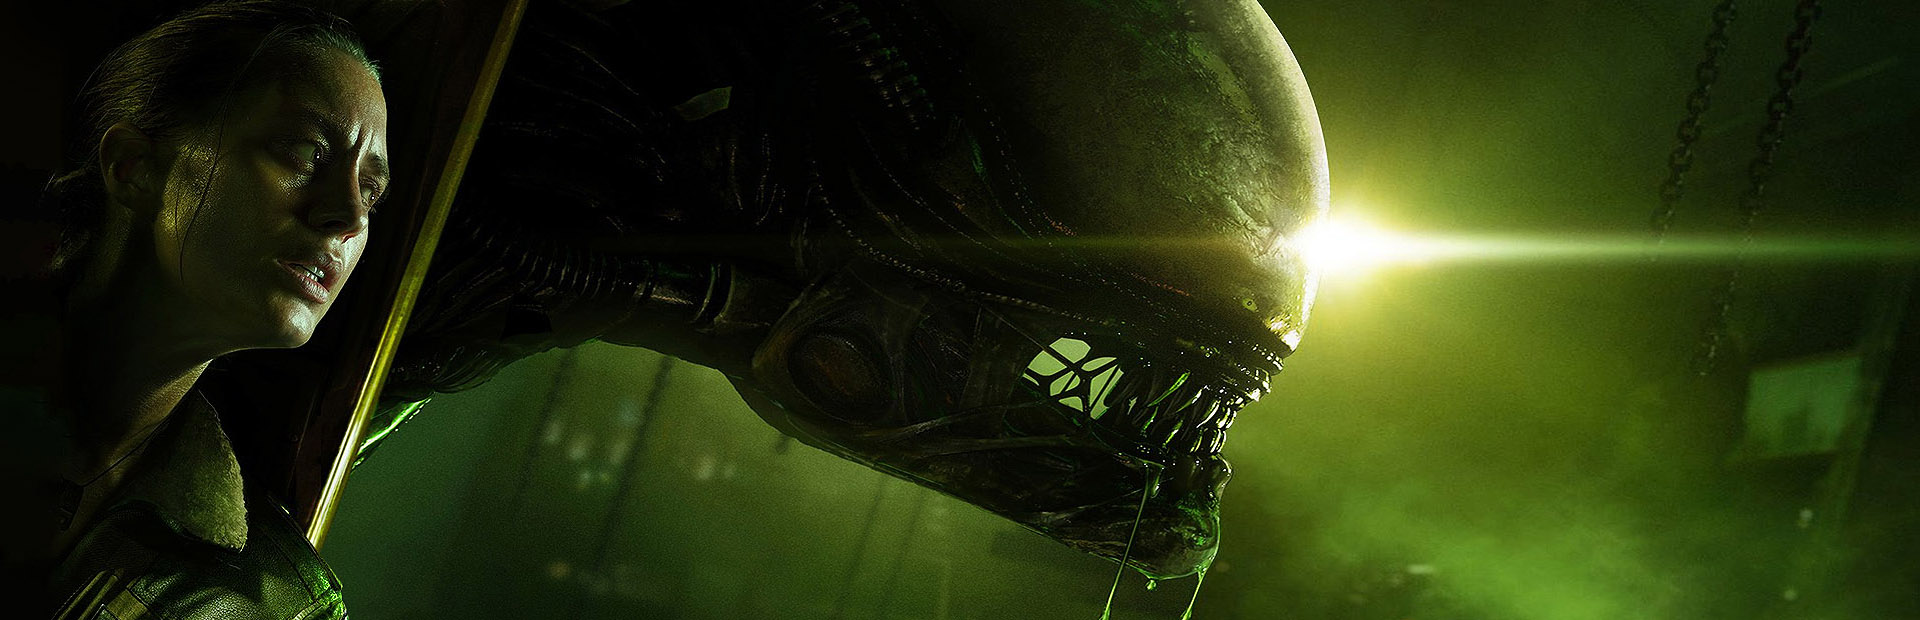 Alien: Isolation - SteamGridDB